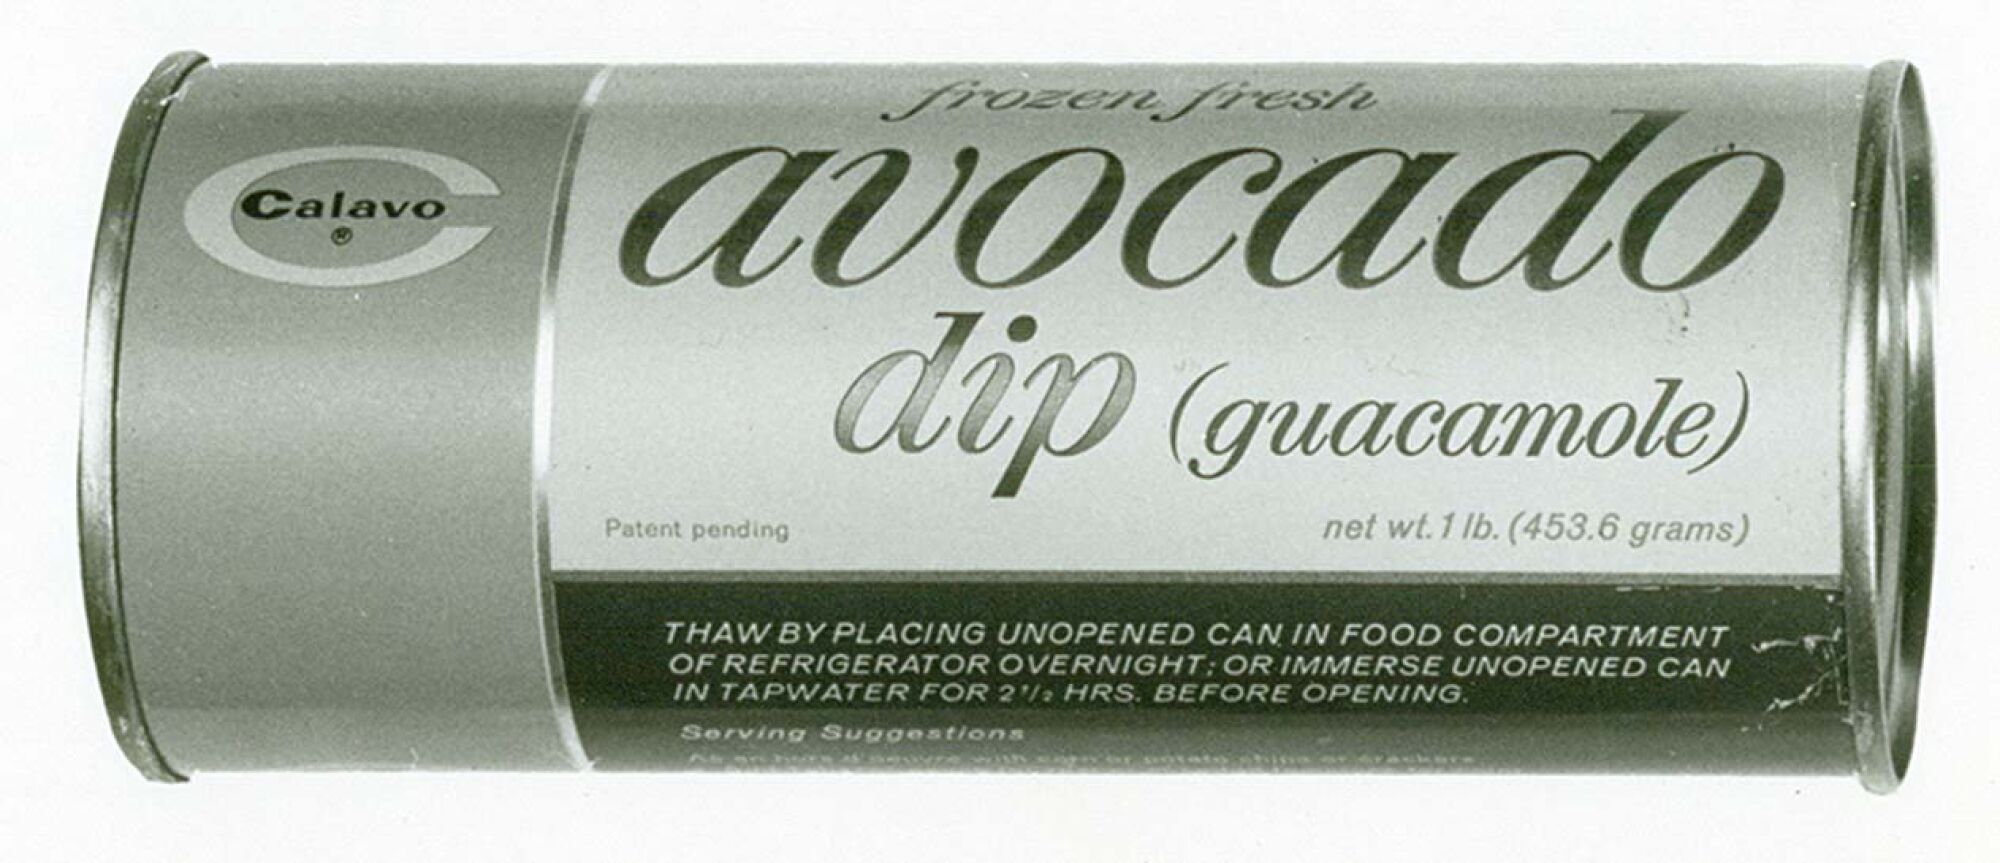 In 1964, the California-based avocado company Calavo introduced a consumer product of frozen avocado dip.